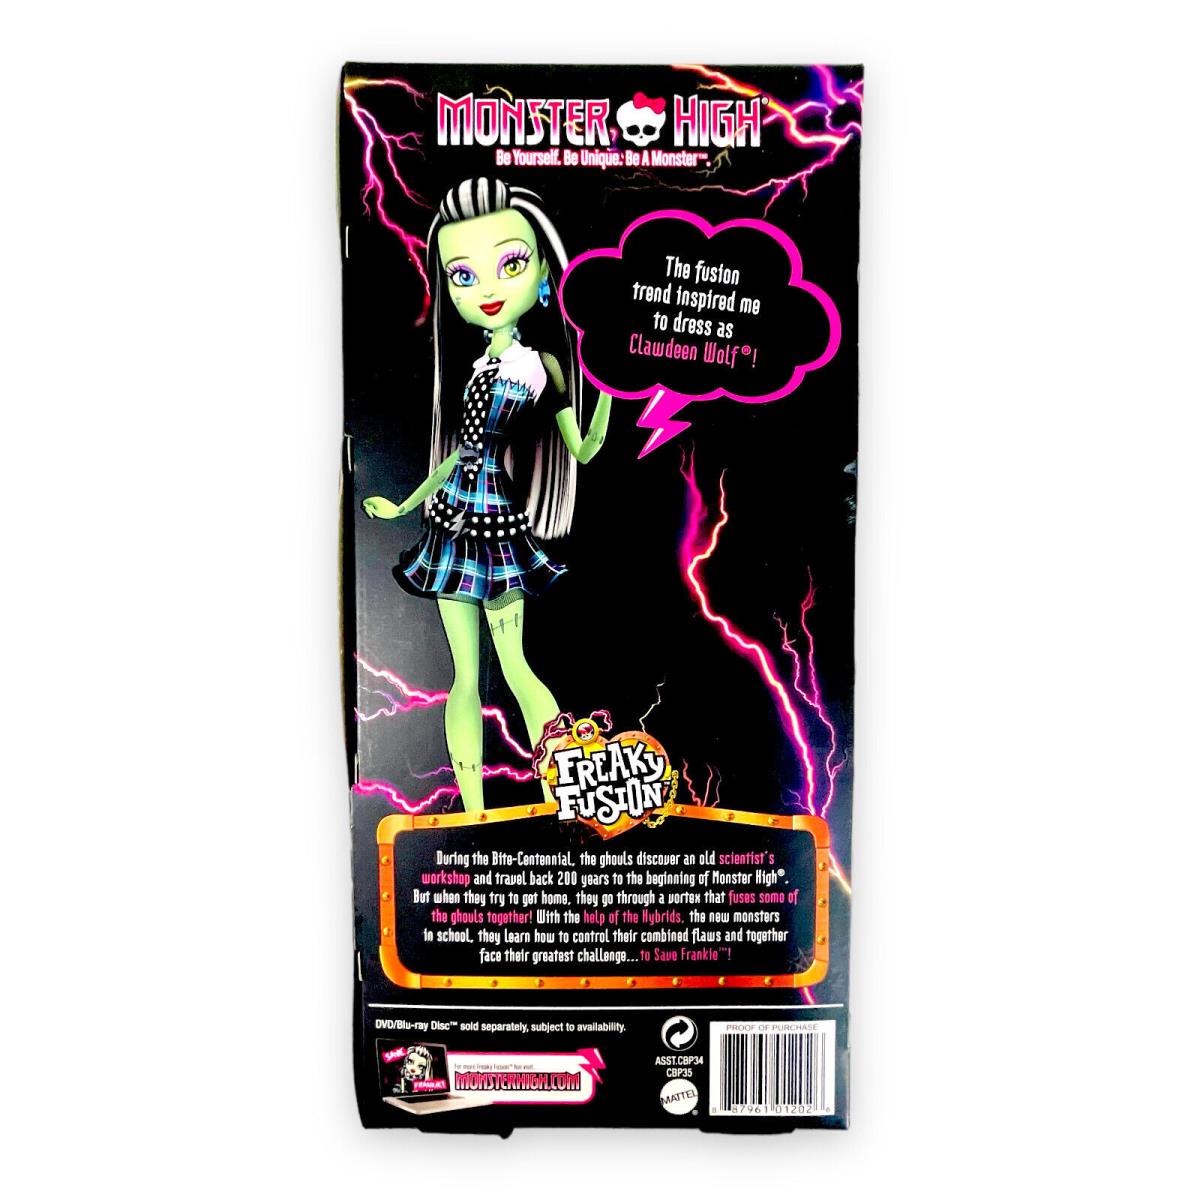 Barbie toy  - Blonde Doll Hair, Green Doll Eye